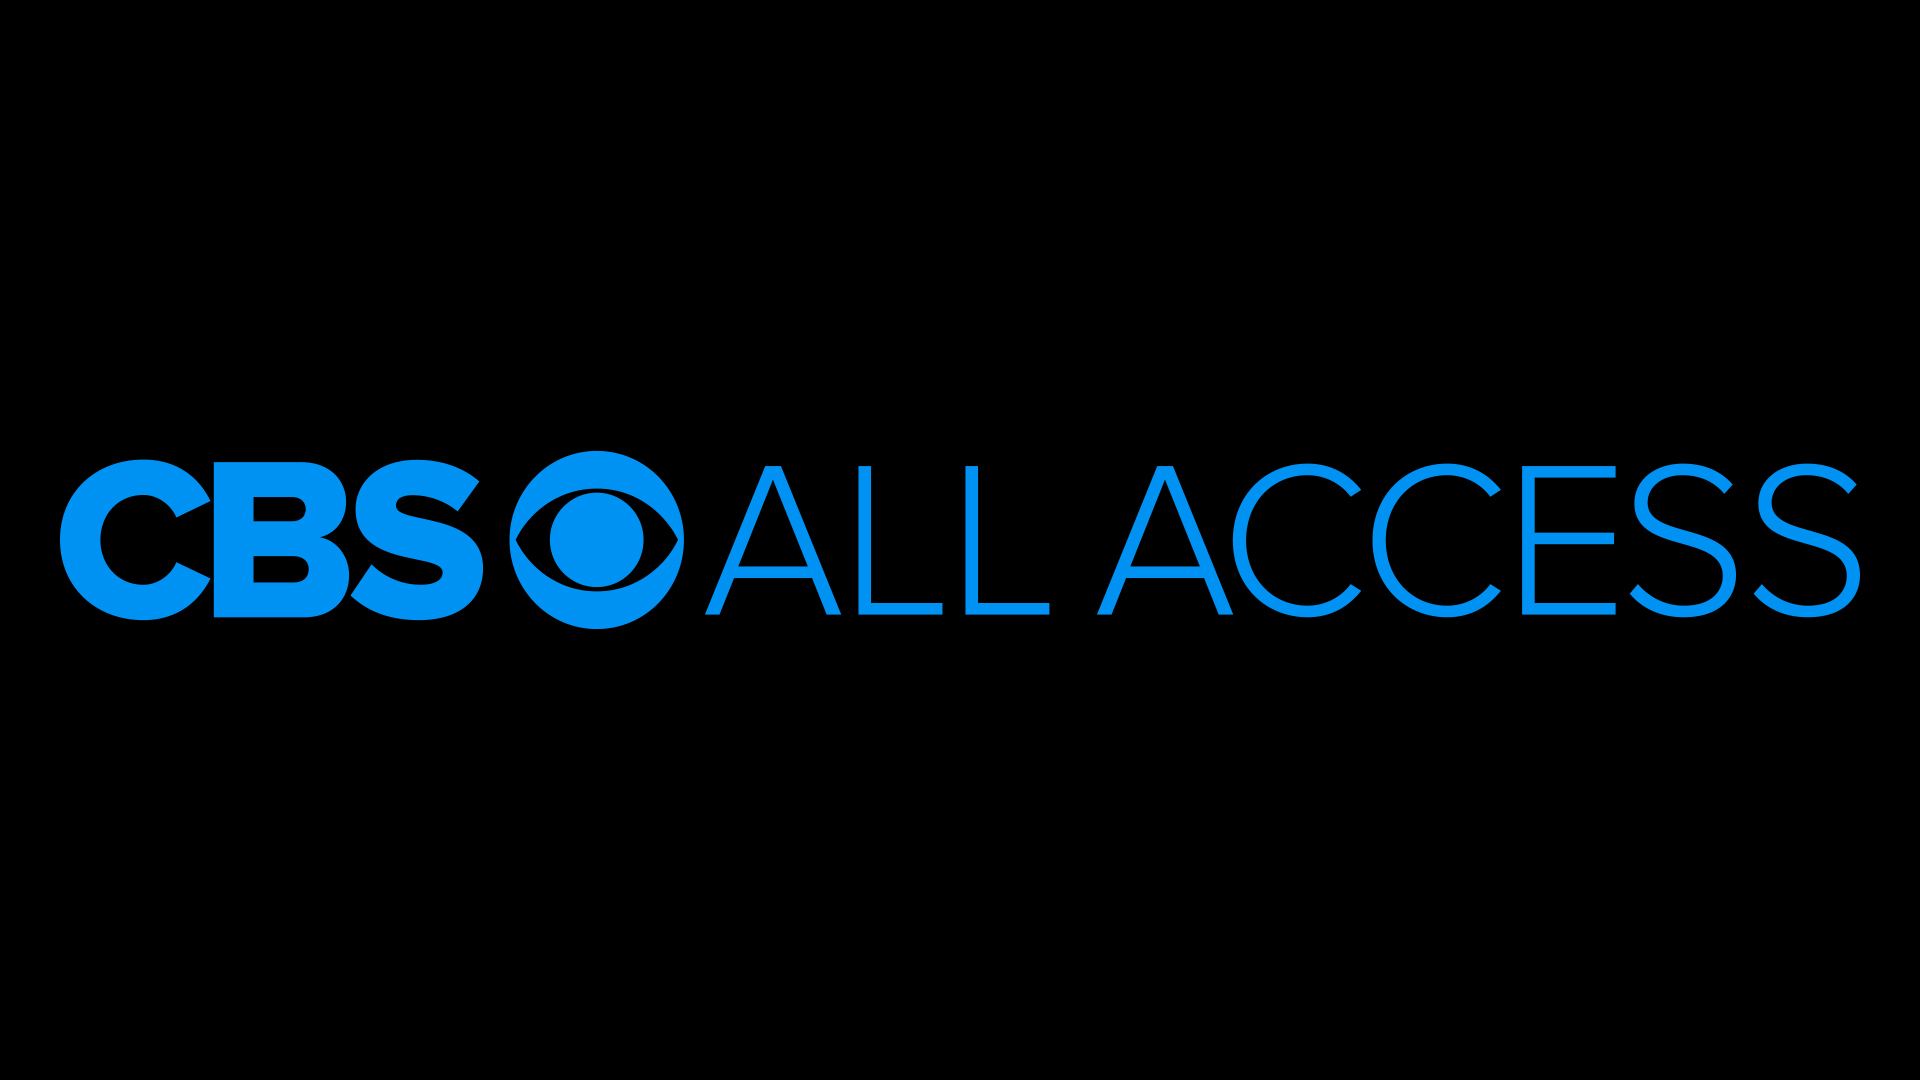 Photo: CBS All access